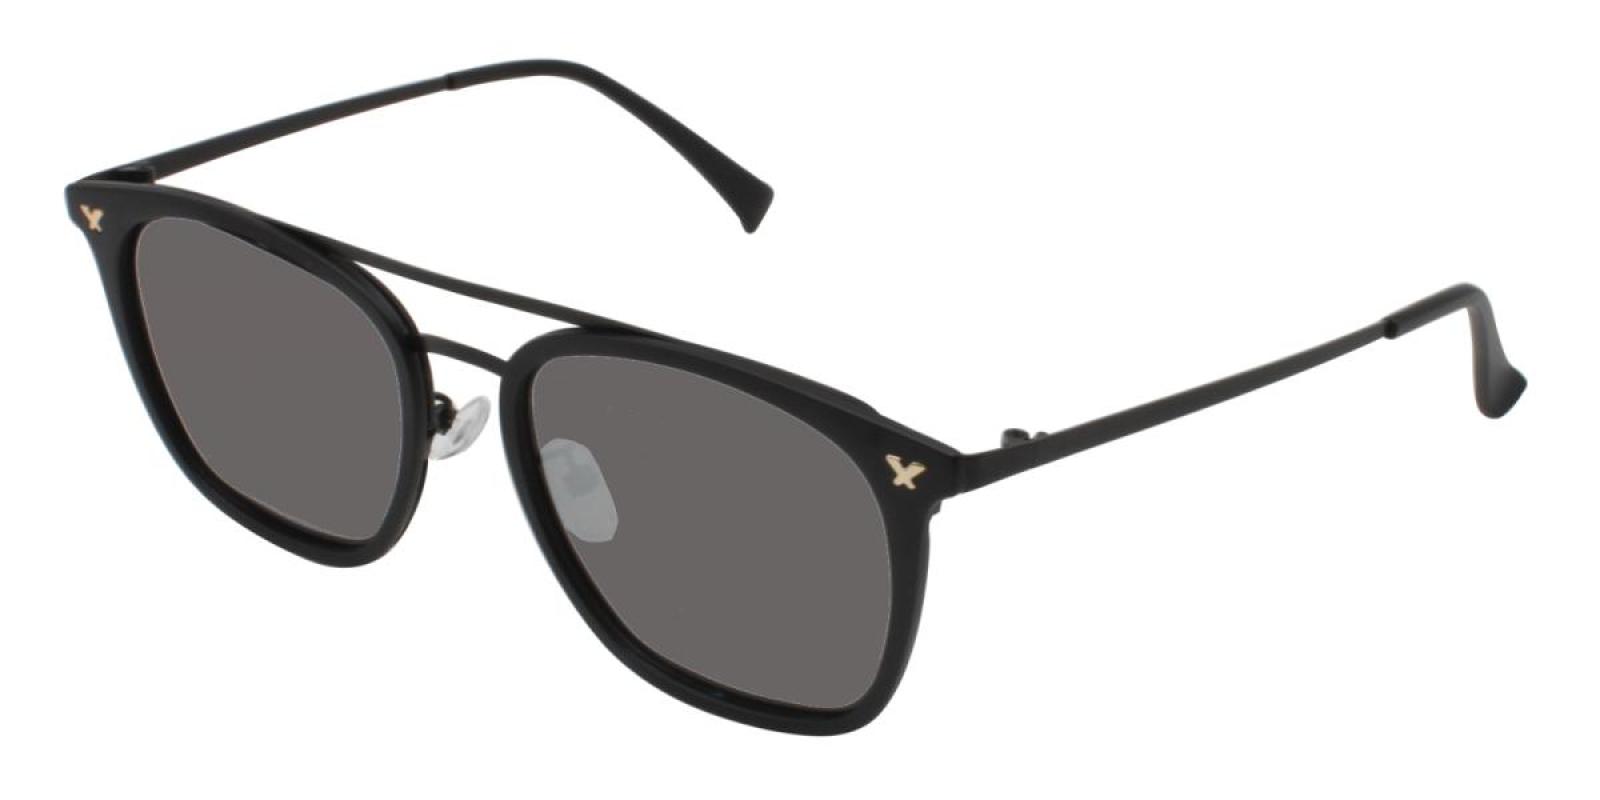 Seagual-Black-Aviator-Combination / Metal / TR-Sunglasses-detail